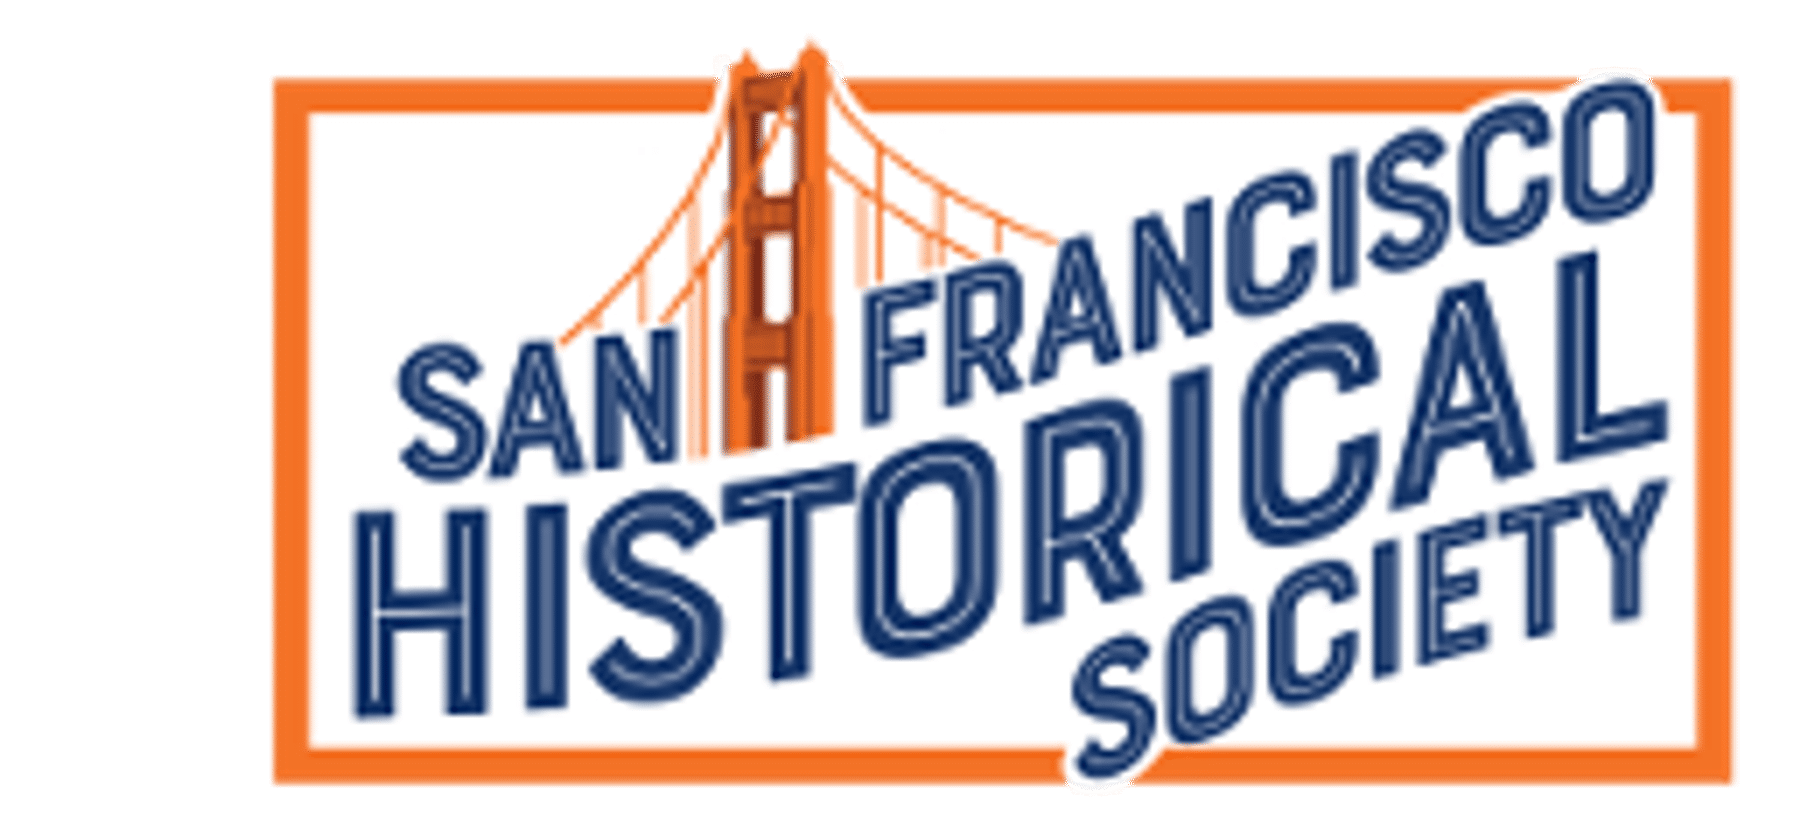 The San Francisco Historical Society | Downtown San Francisco